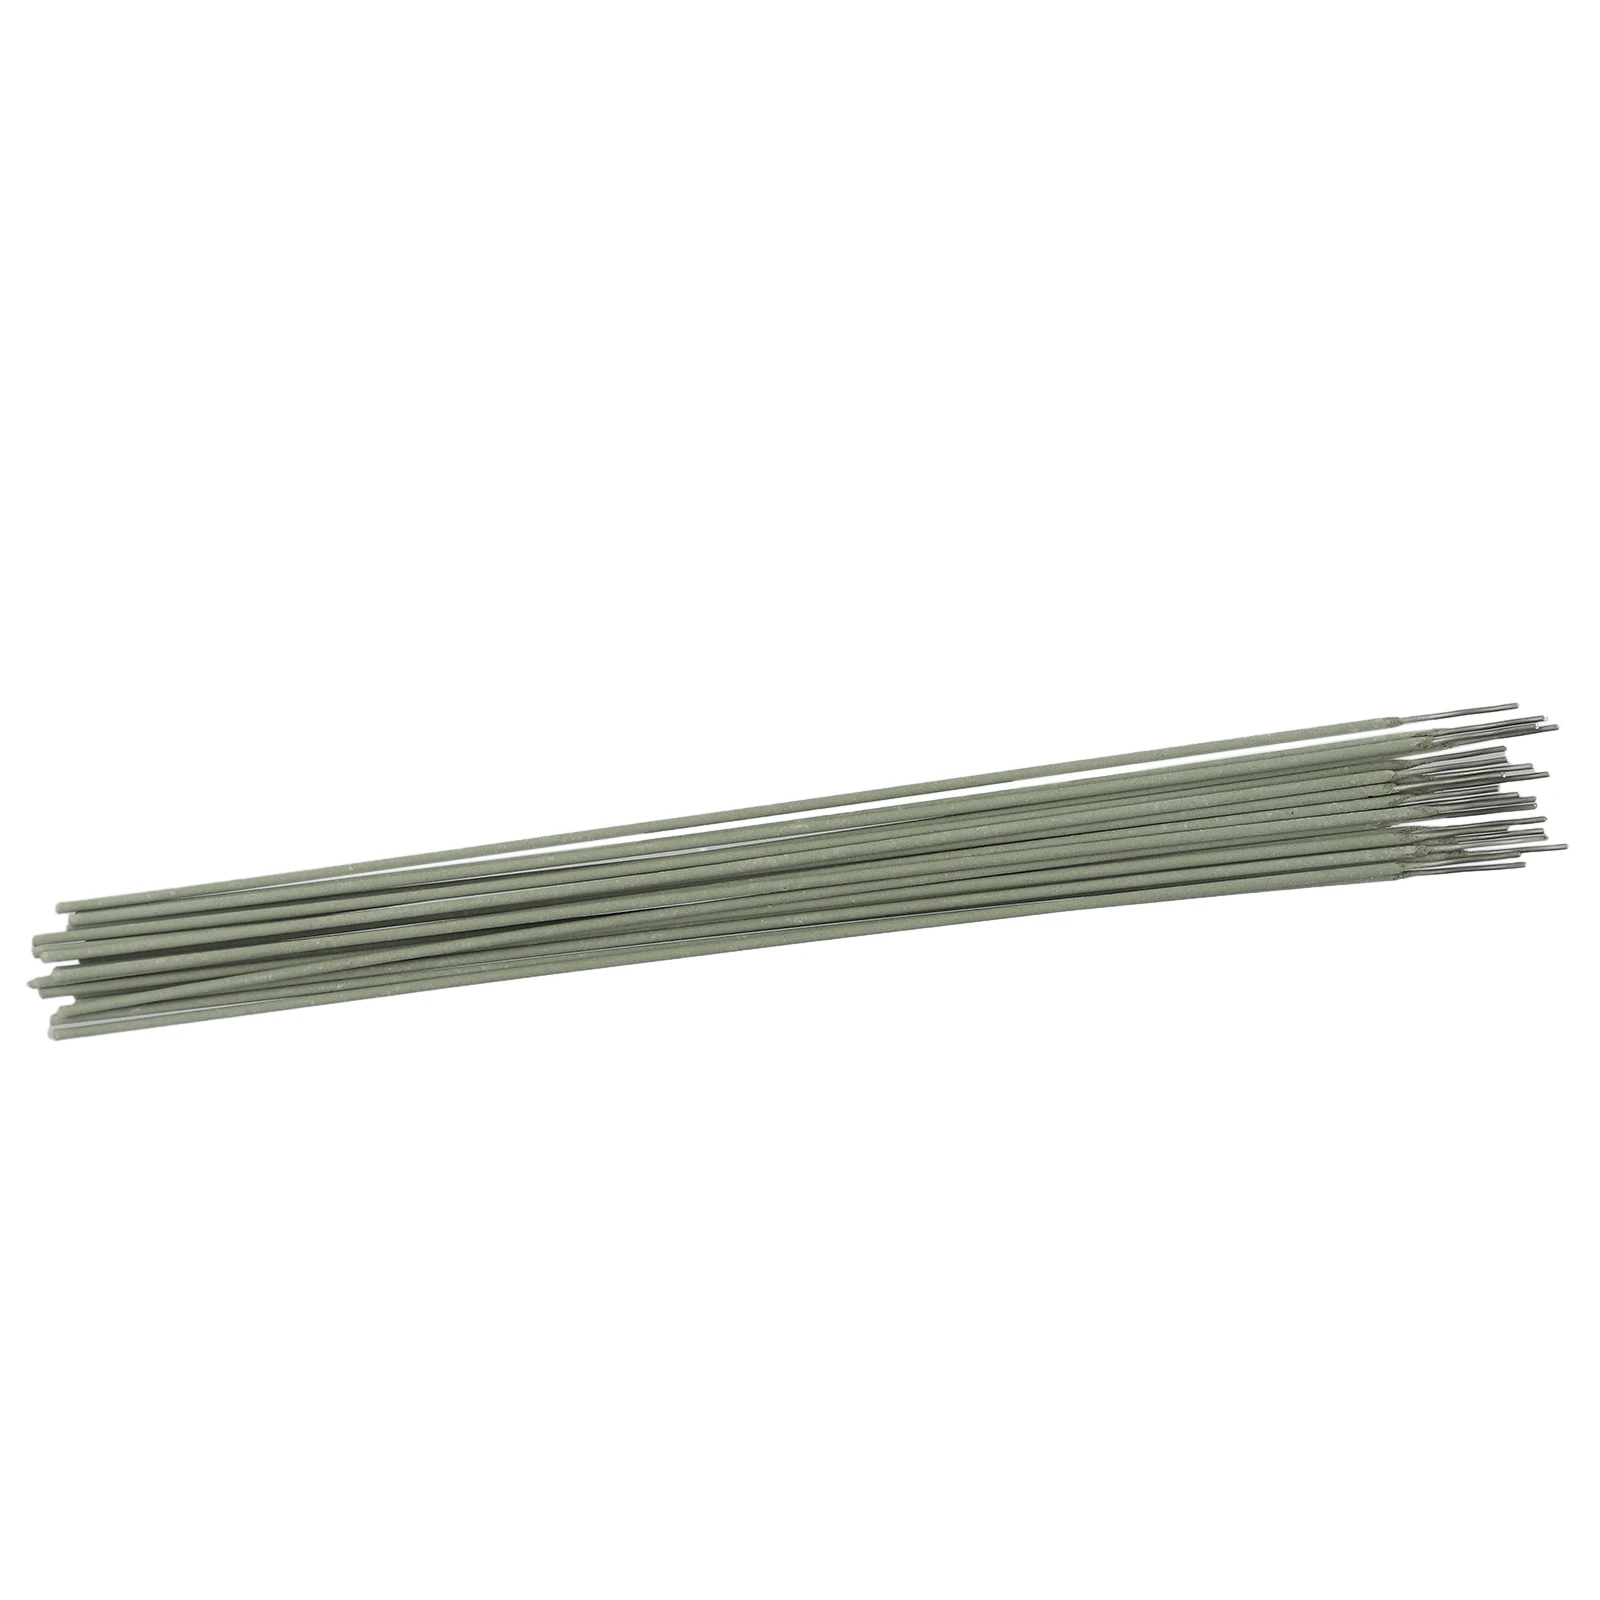 

Newest Practical Protable Welding Rod 304 201/202/301/302/304 20pcs 300℃ Part Electrode For AC/DC Rust Resistant